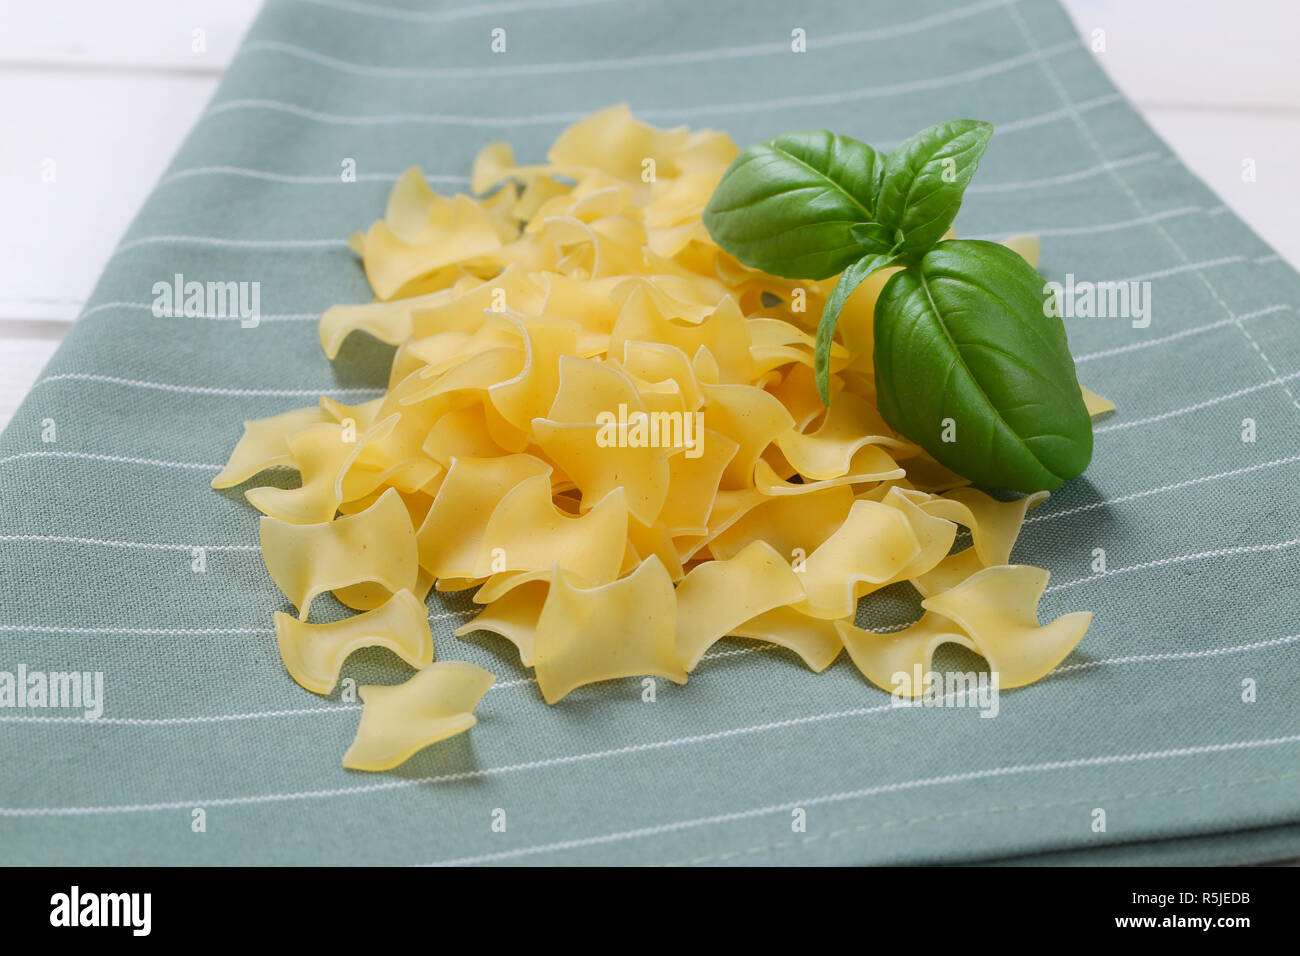 quadretti - square shaped pasta Stock Photo